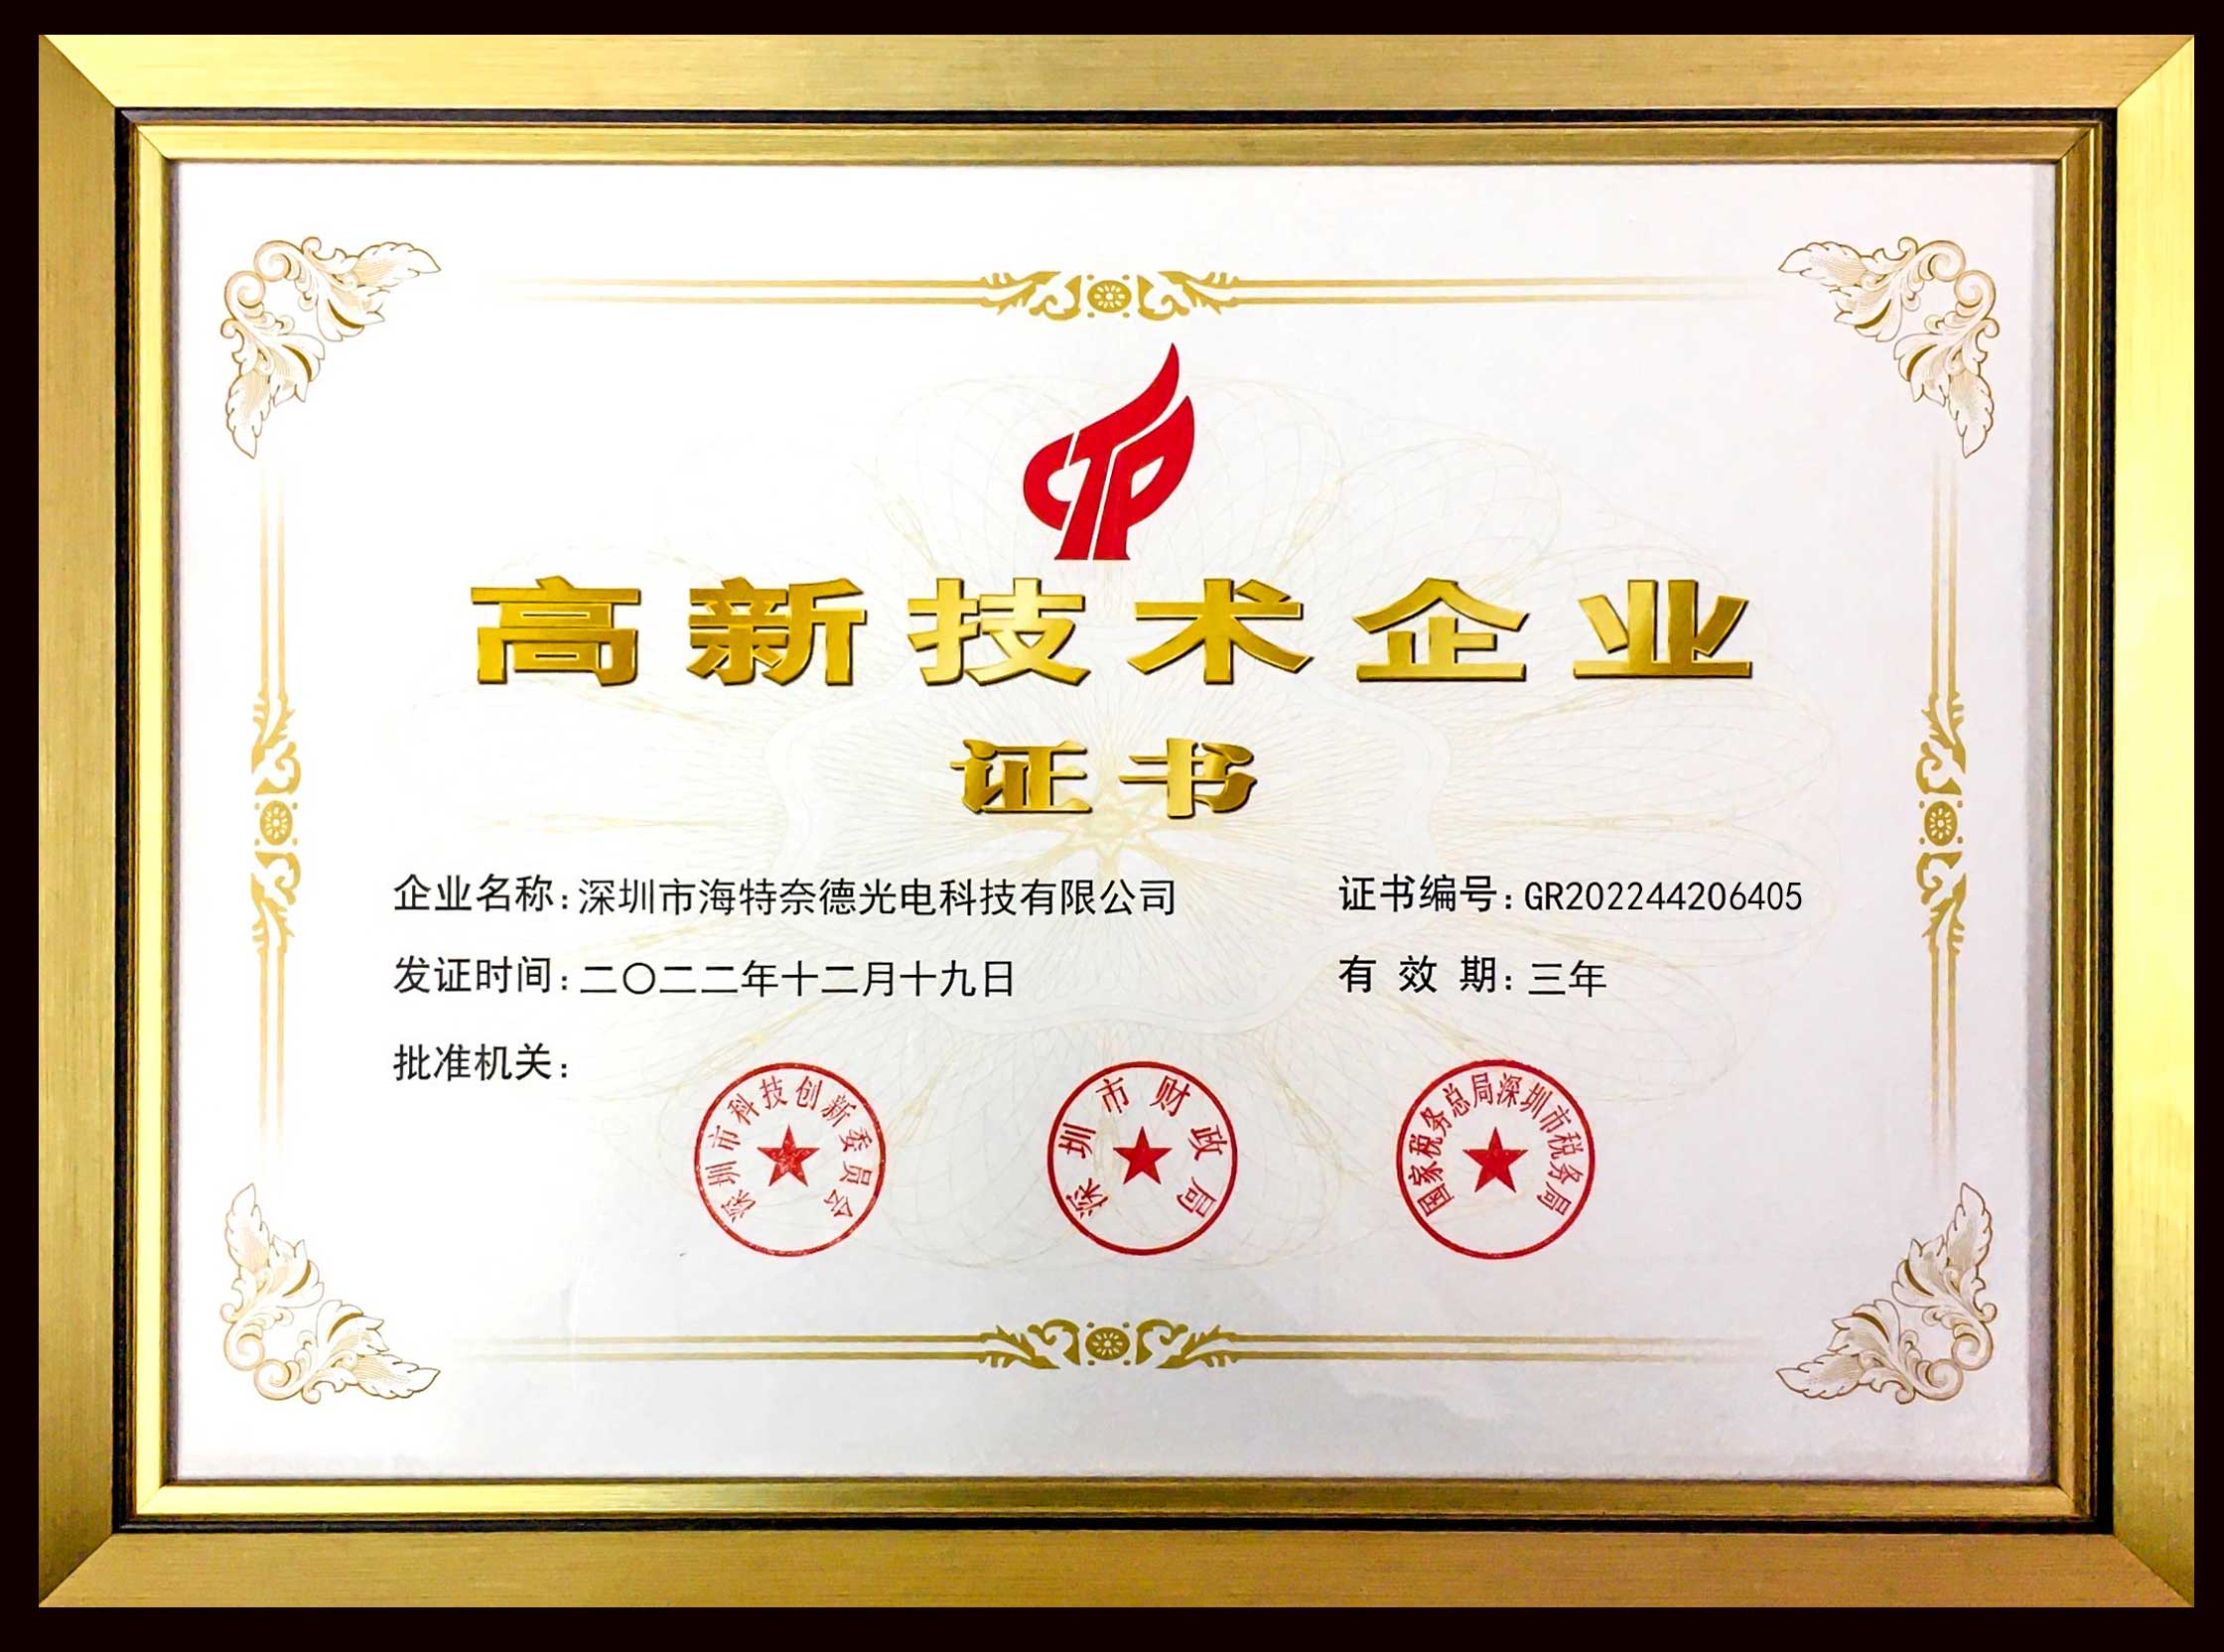 Certificate of high-tech enterprises.jpg